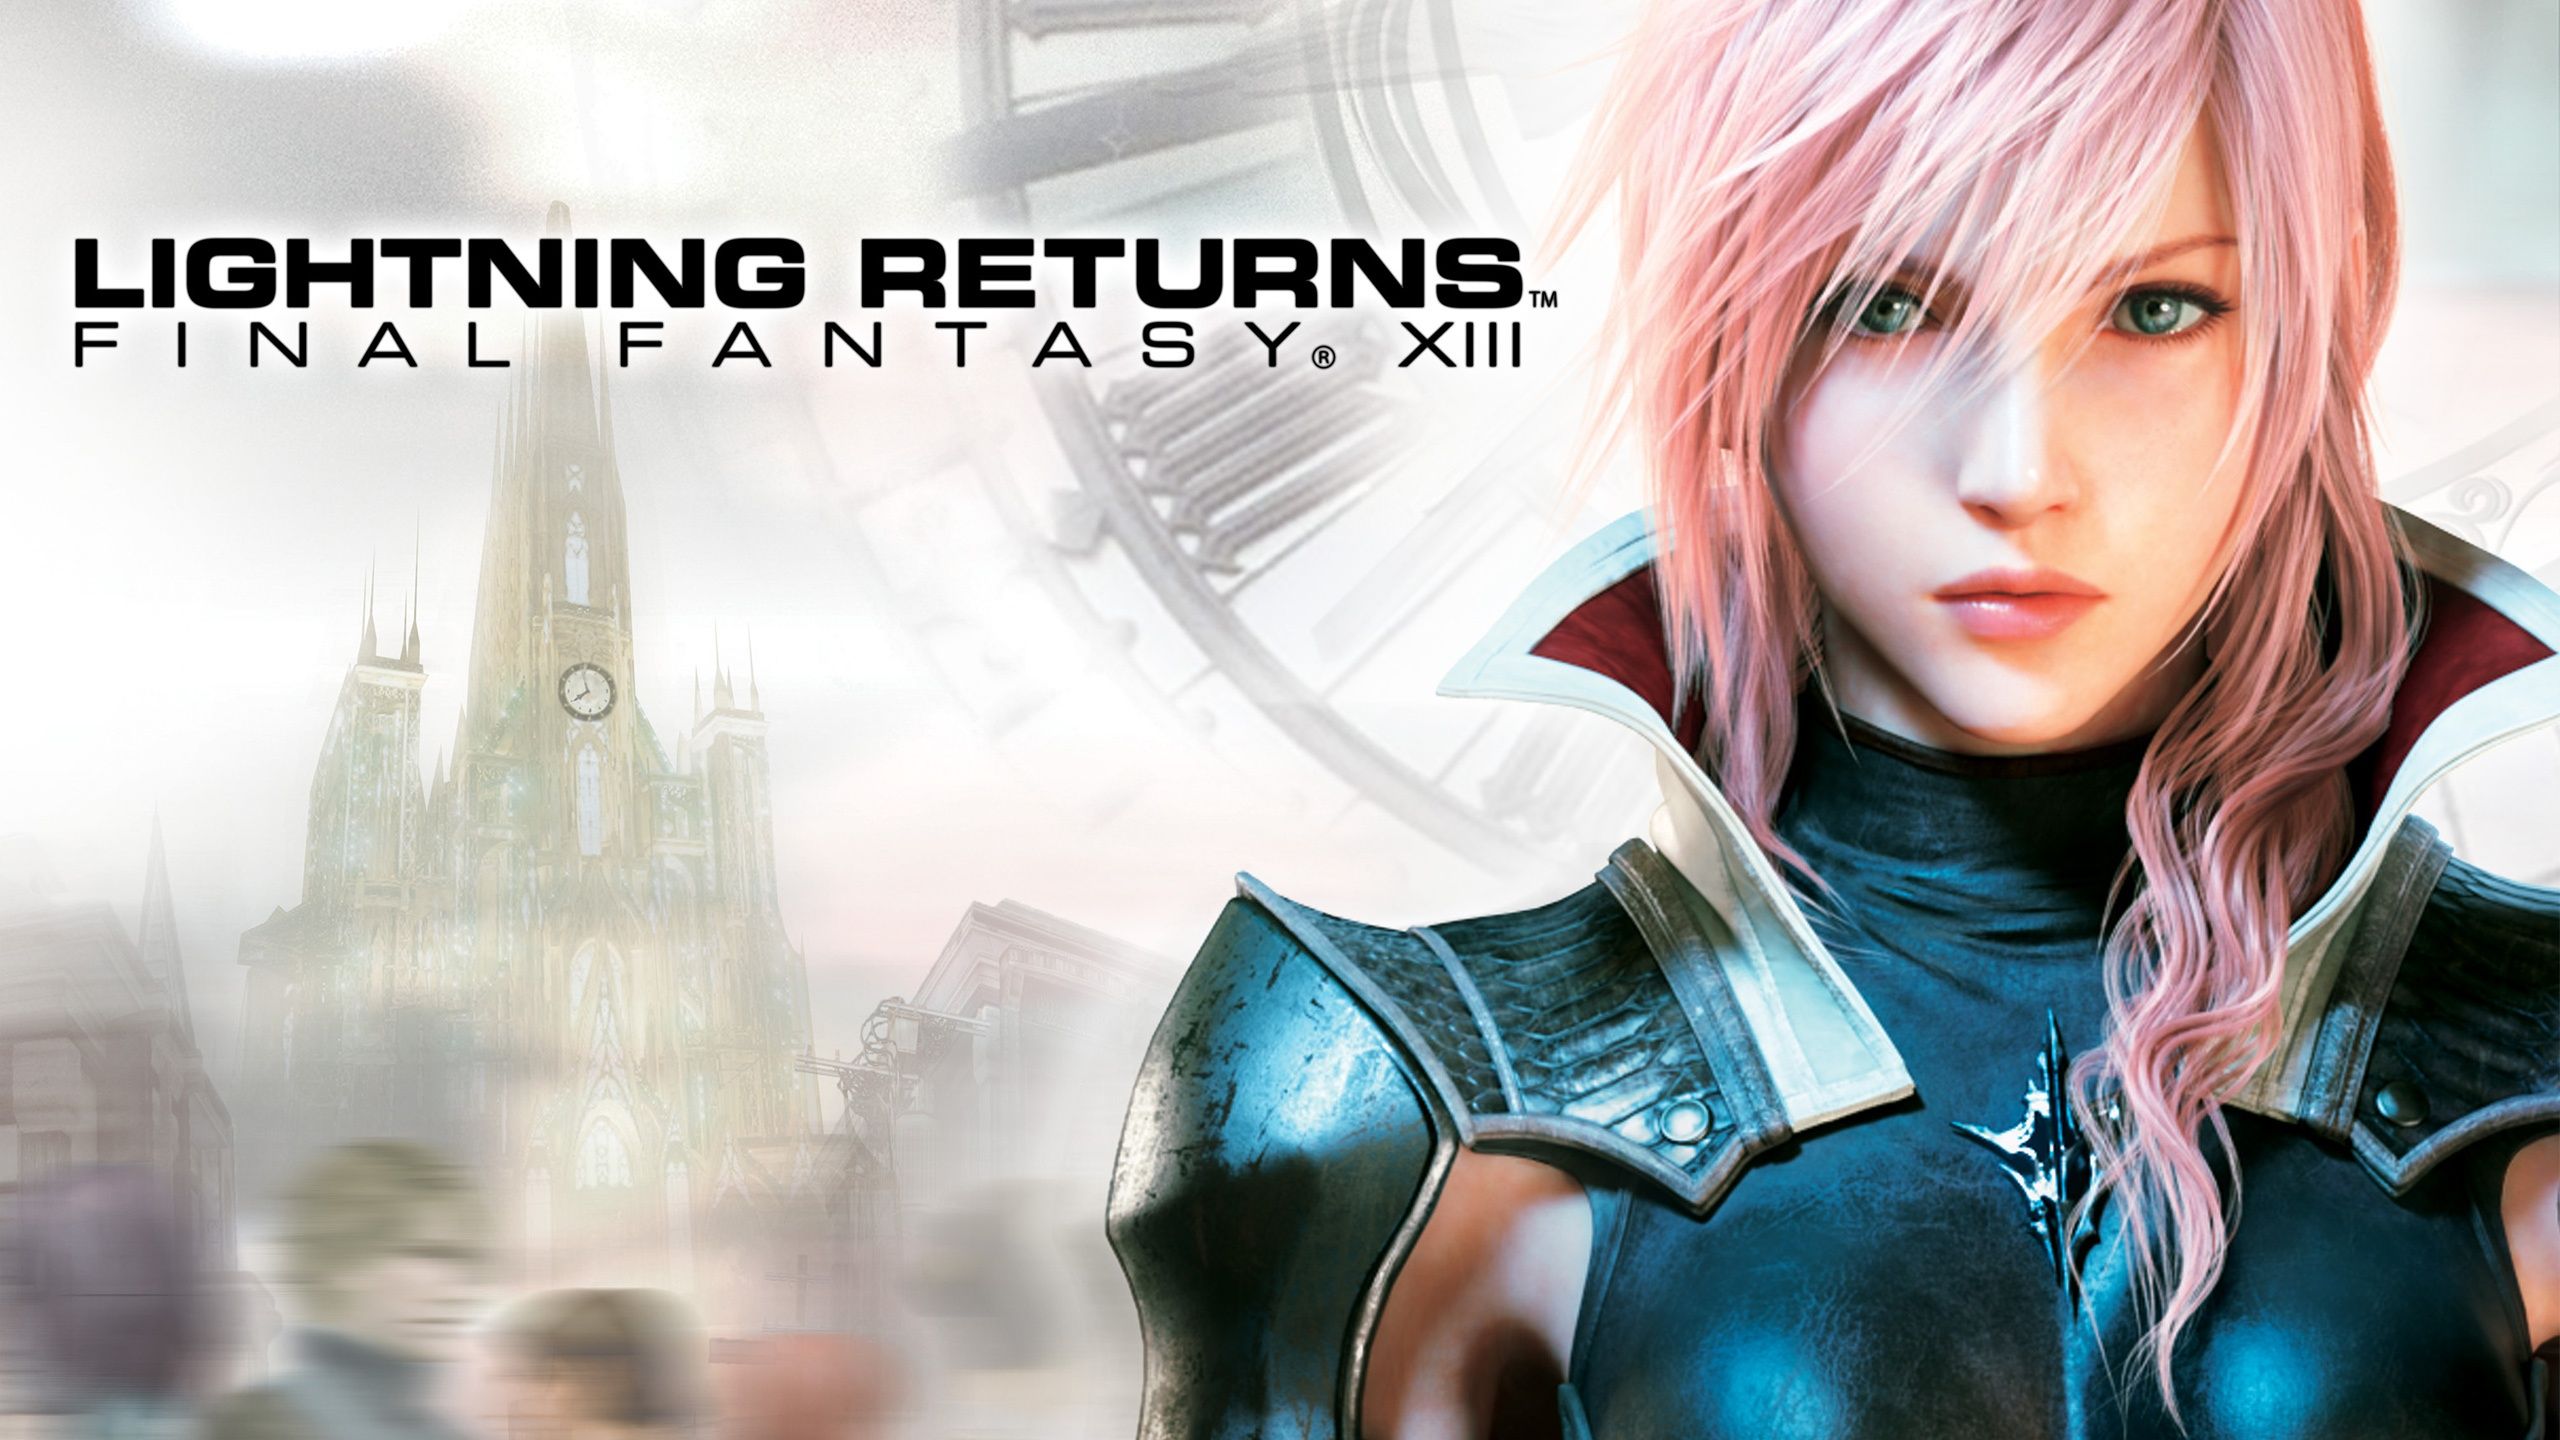 Final Fantasy Lightning Returns Wallpaper in jpg format for free download